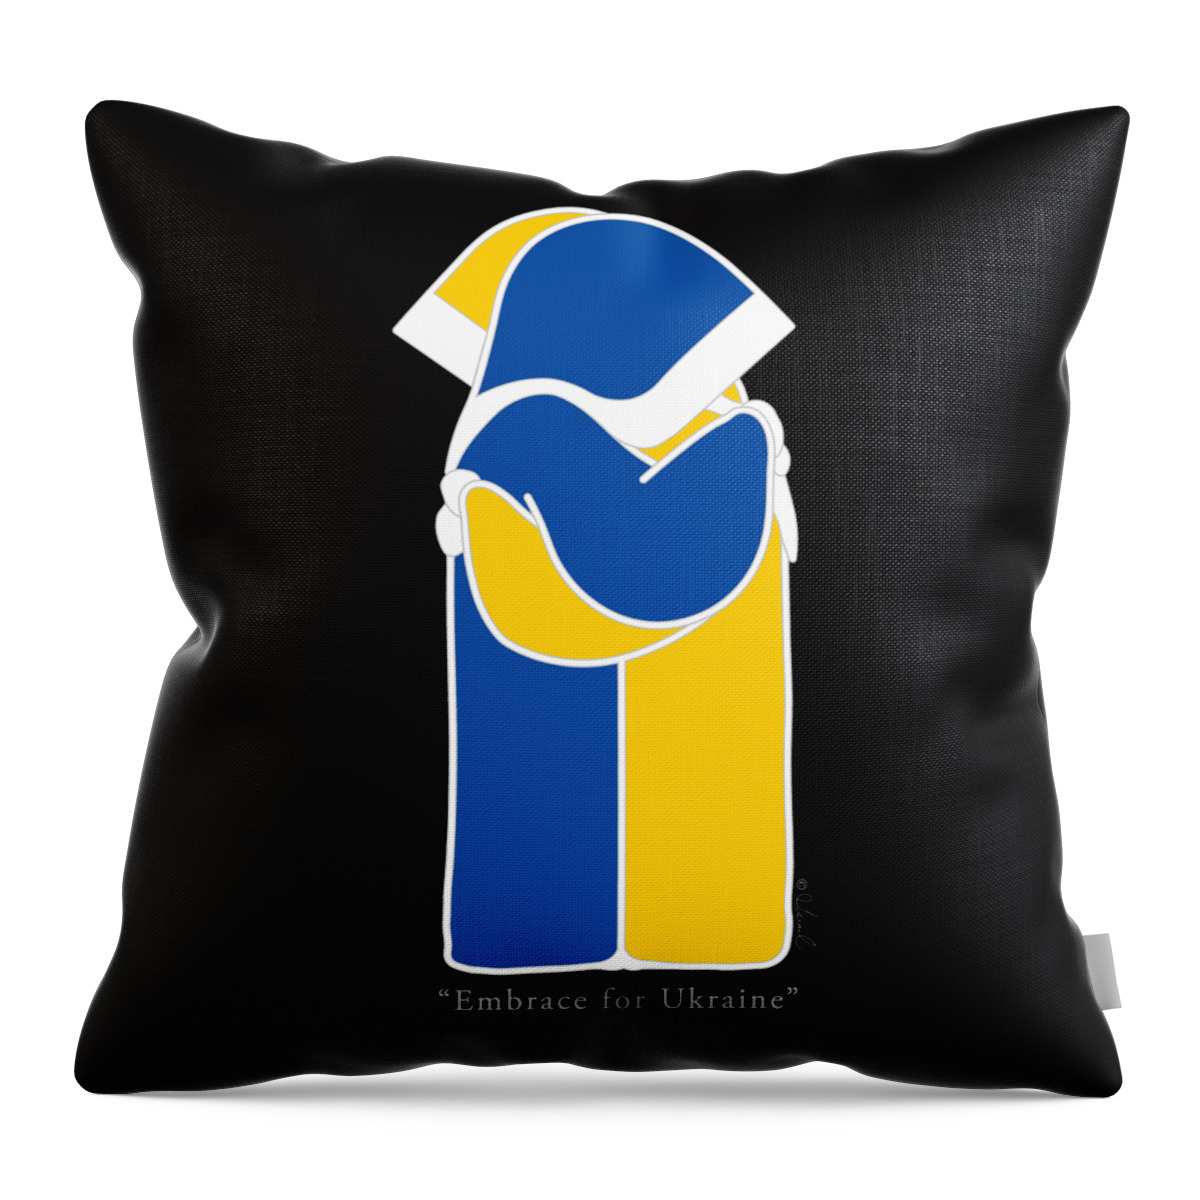 Ukraine Throw Pillow featuring the digital art Embrace for Ukraine by Israel Guajardo